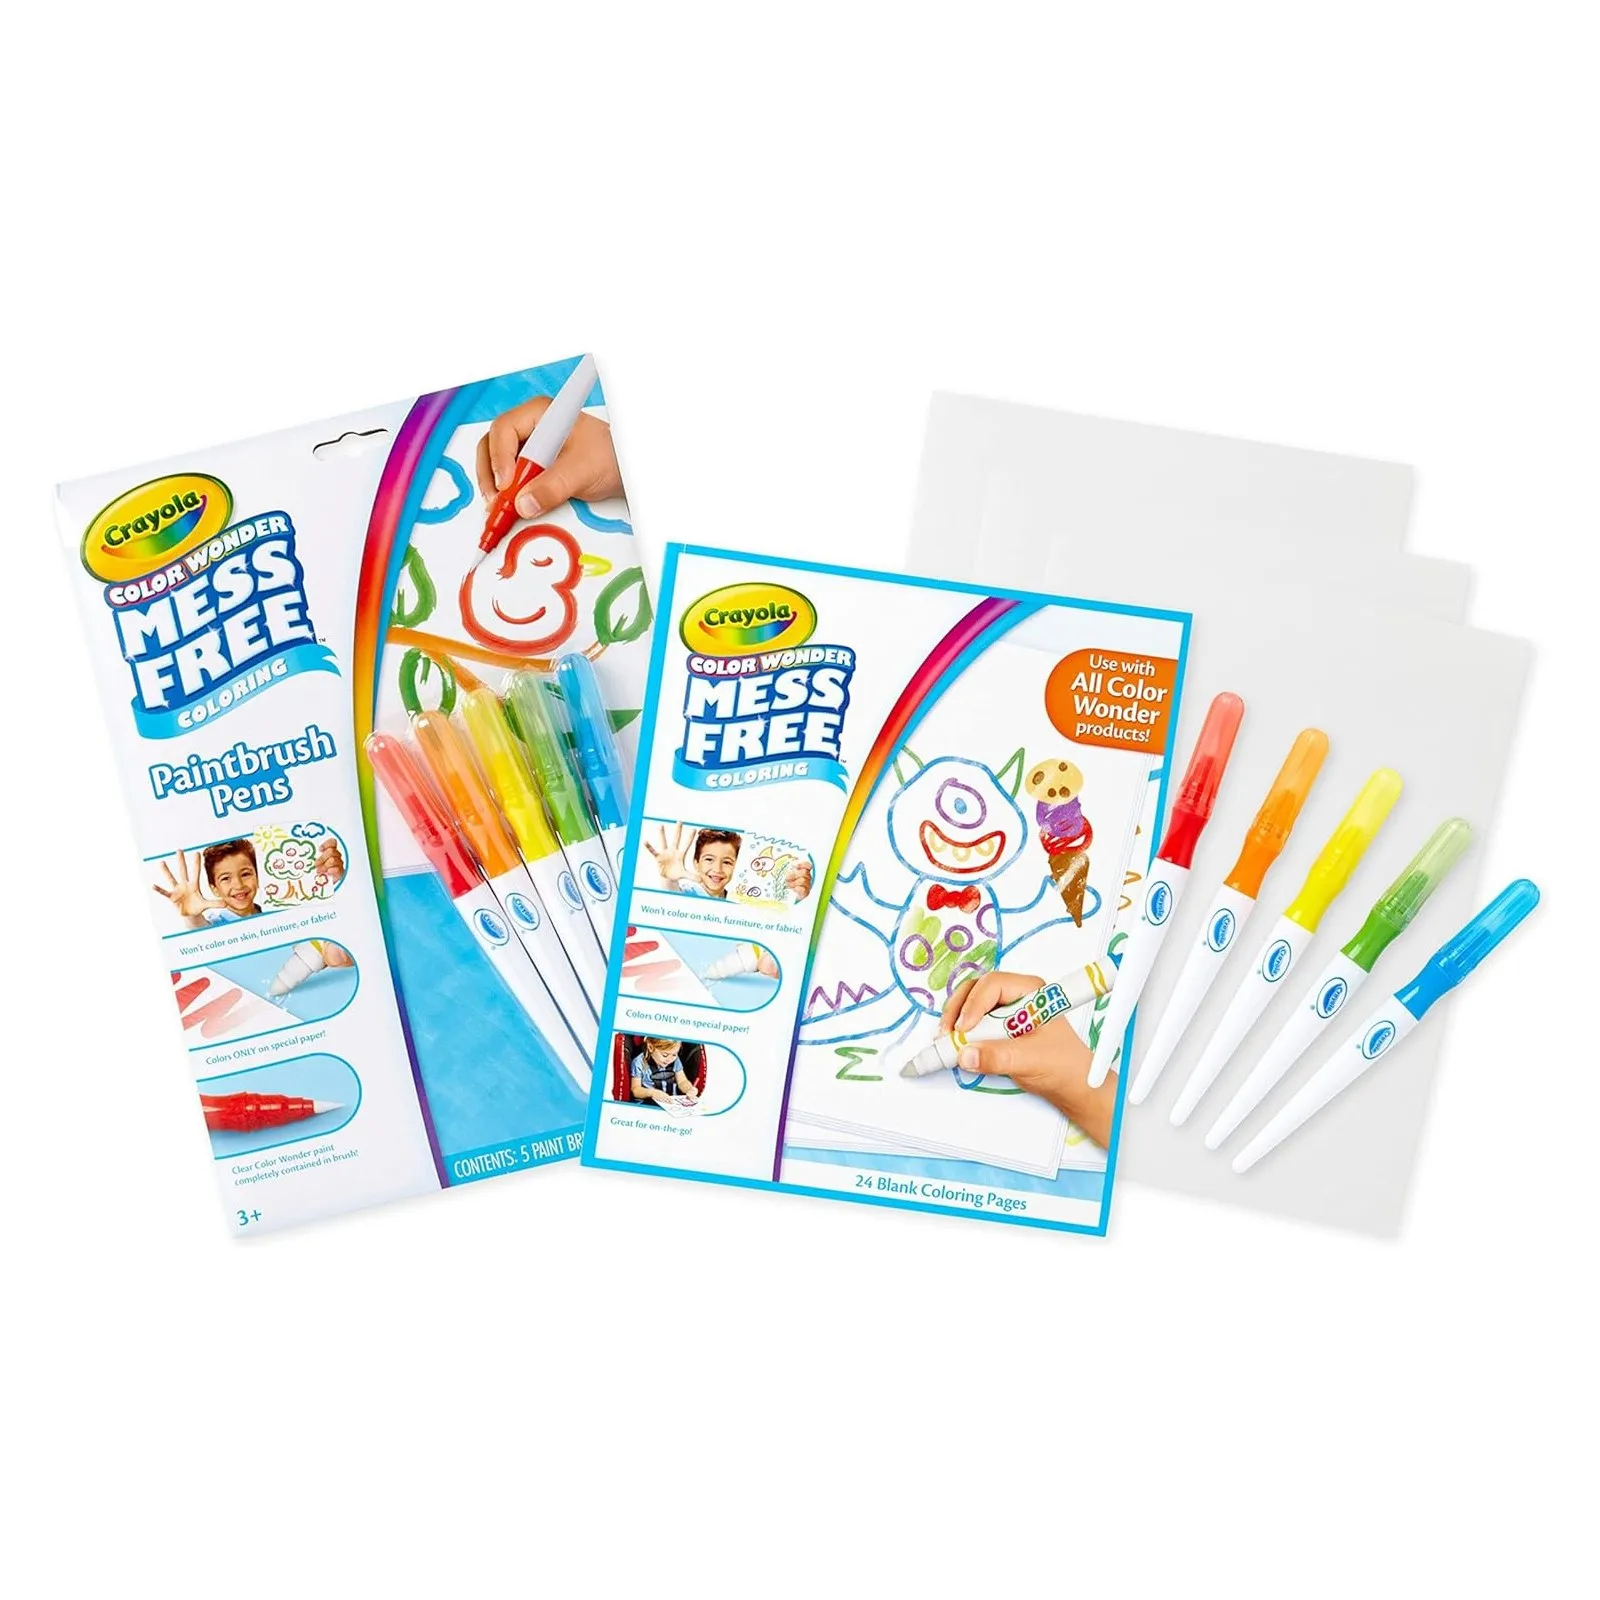 Crayola document Wonder Paintbrush Pens and Paper, Mess Free Coloring, Painting Set, Toddler Arts & Crafts, Easter Basket Stuffer